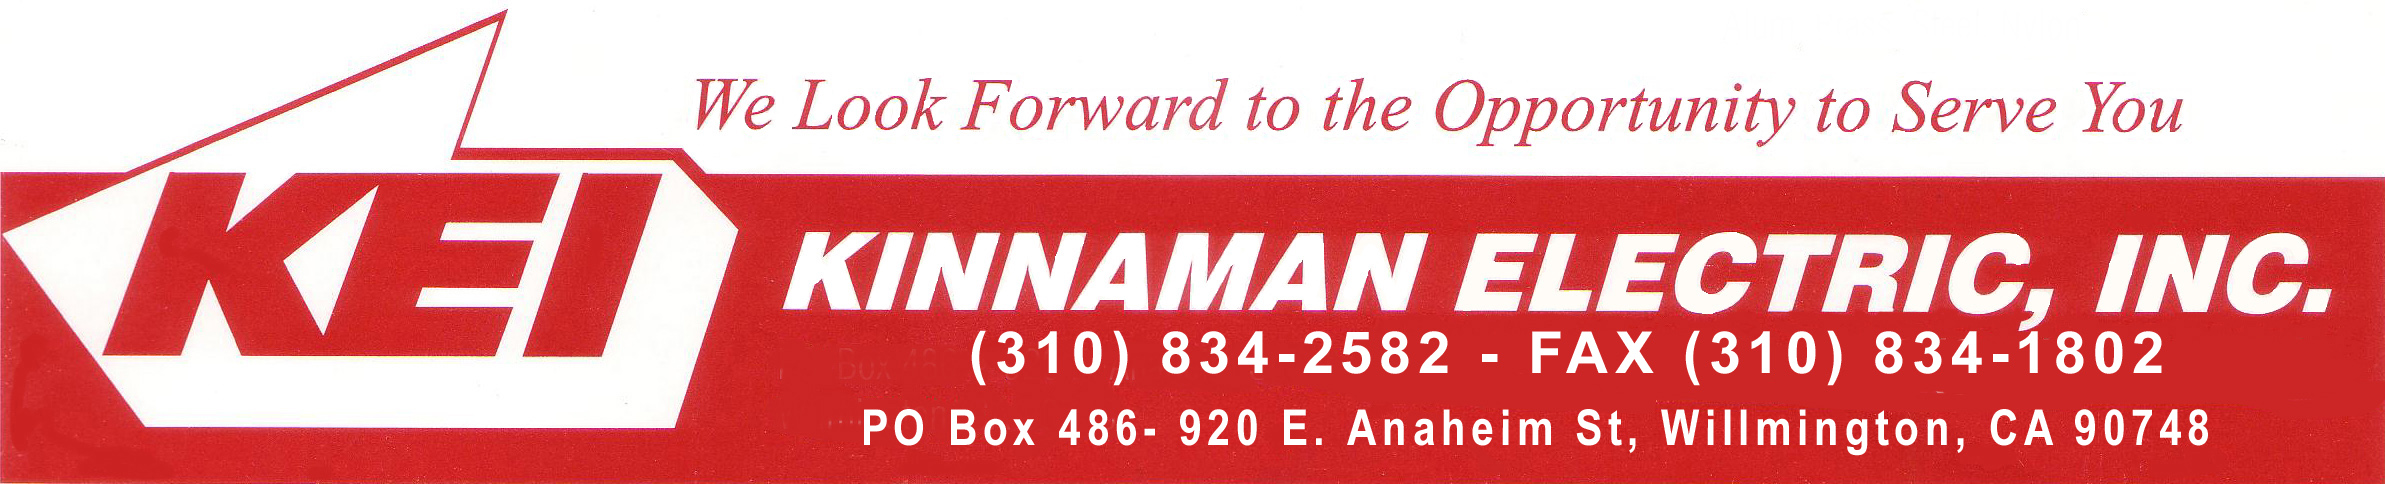 Kinnaman Electric, Inc.